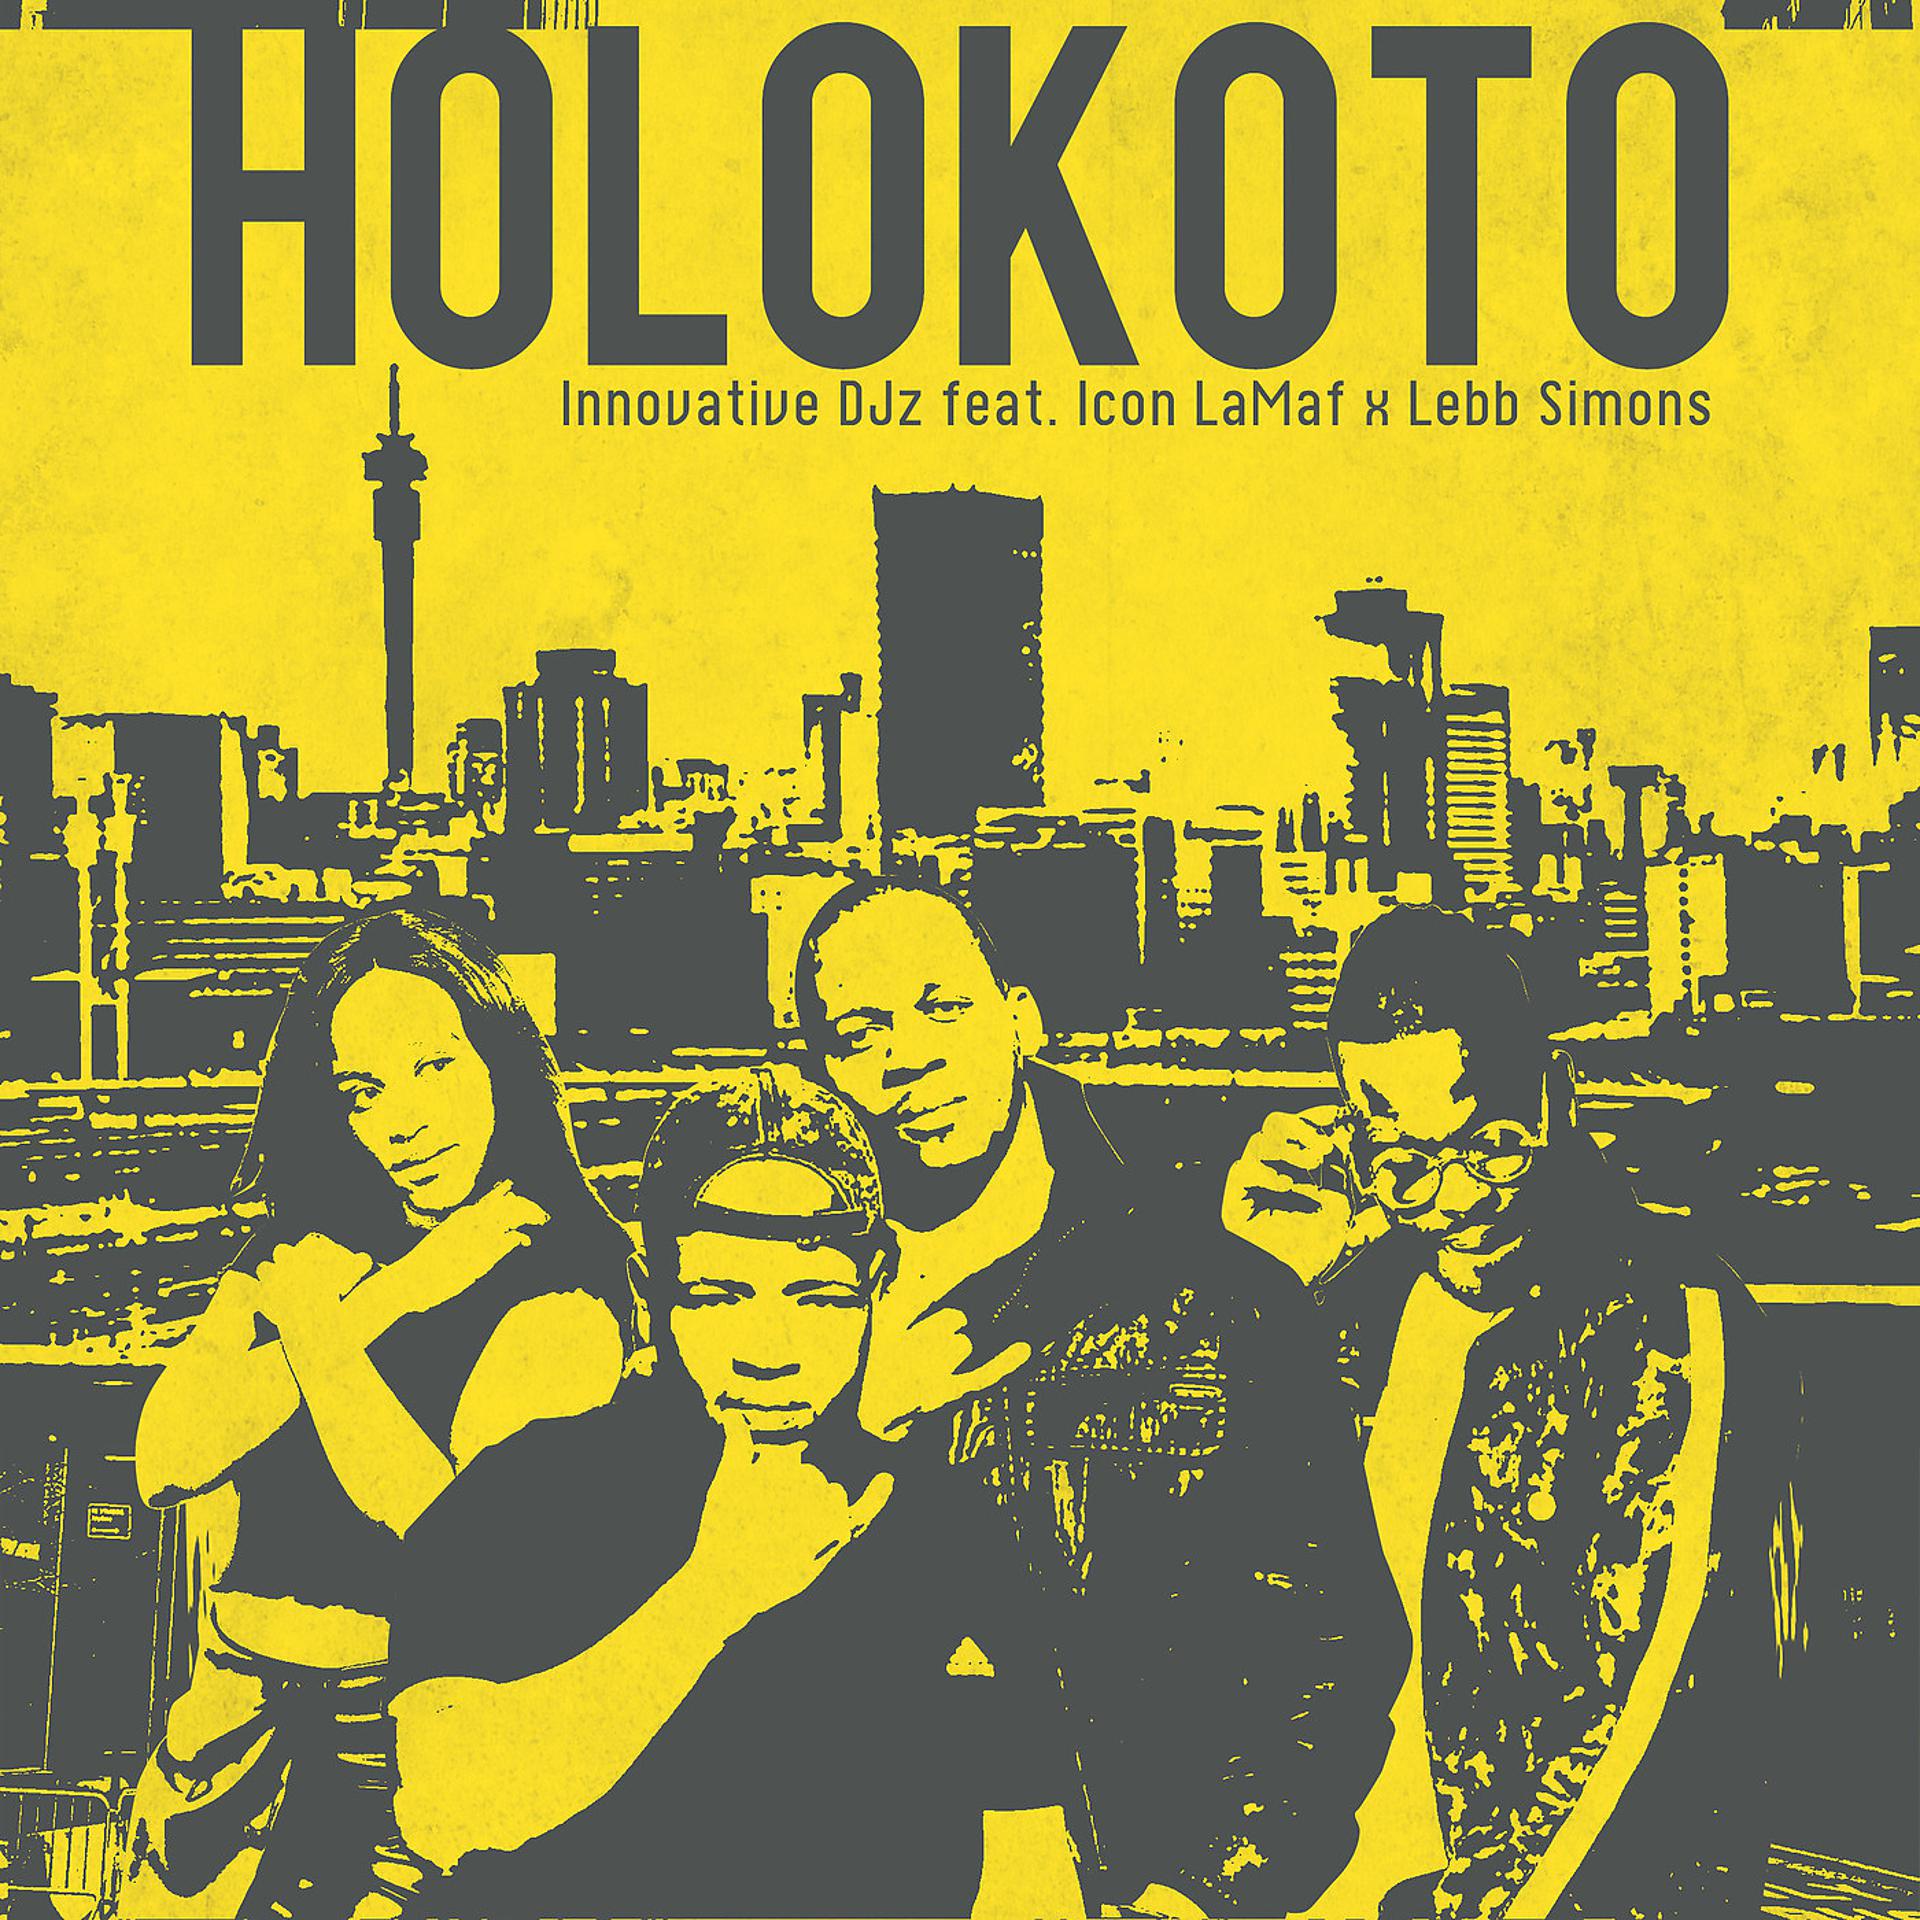 Постер альбома Holokoto